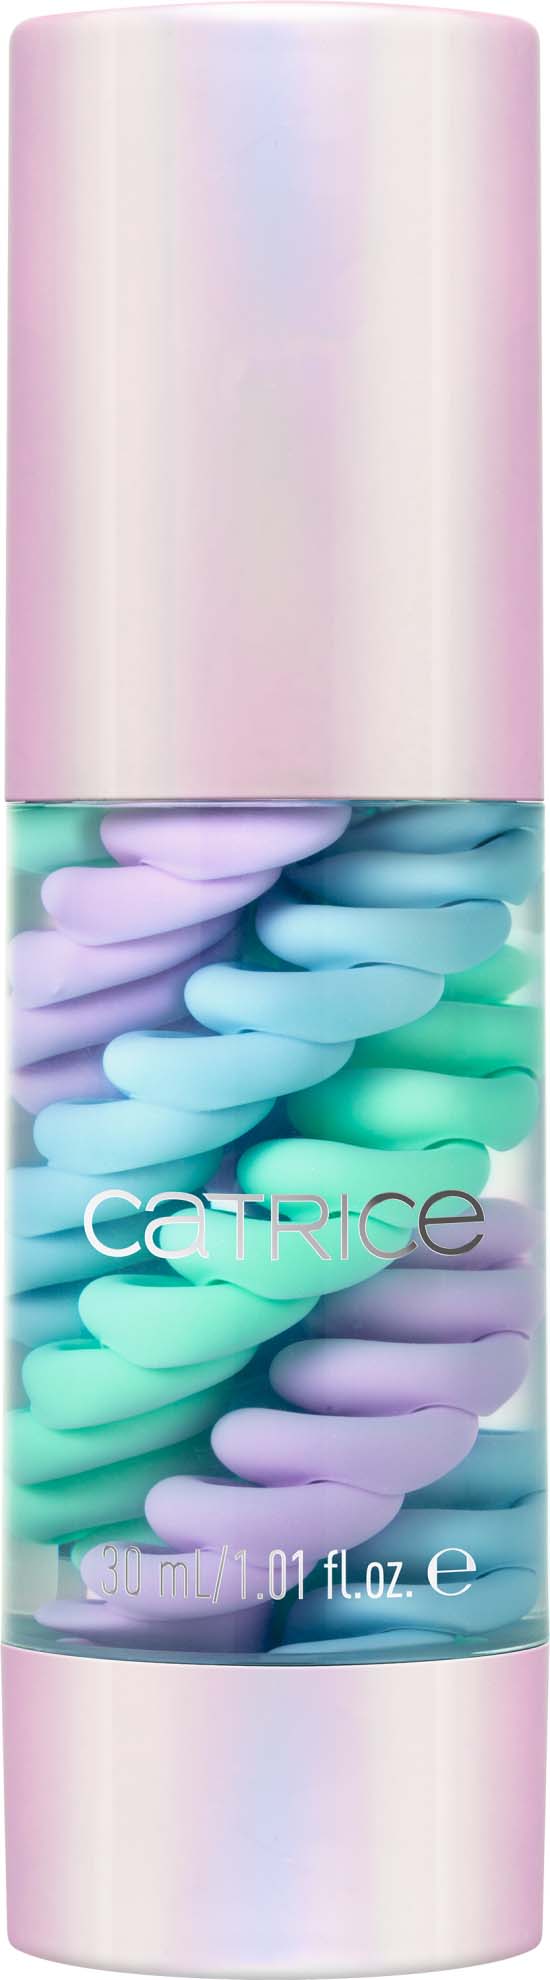 Catrice METAFACE Colour Correcting 30 Glaze ml Primer